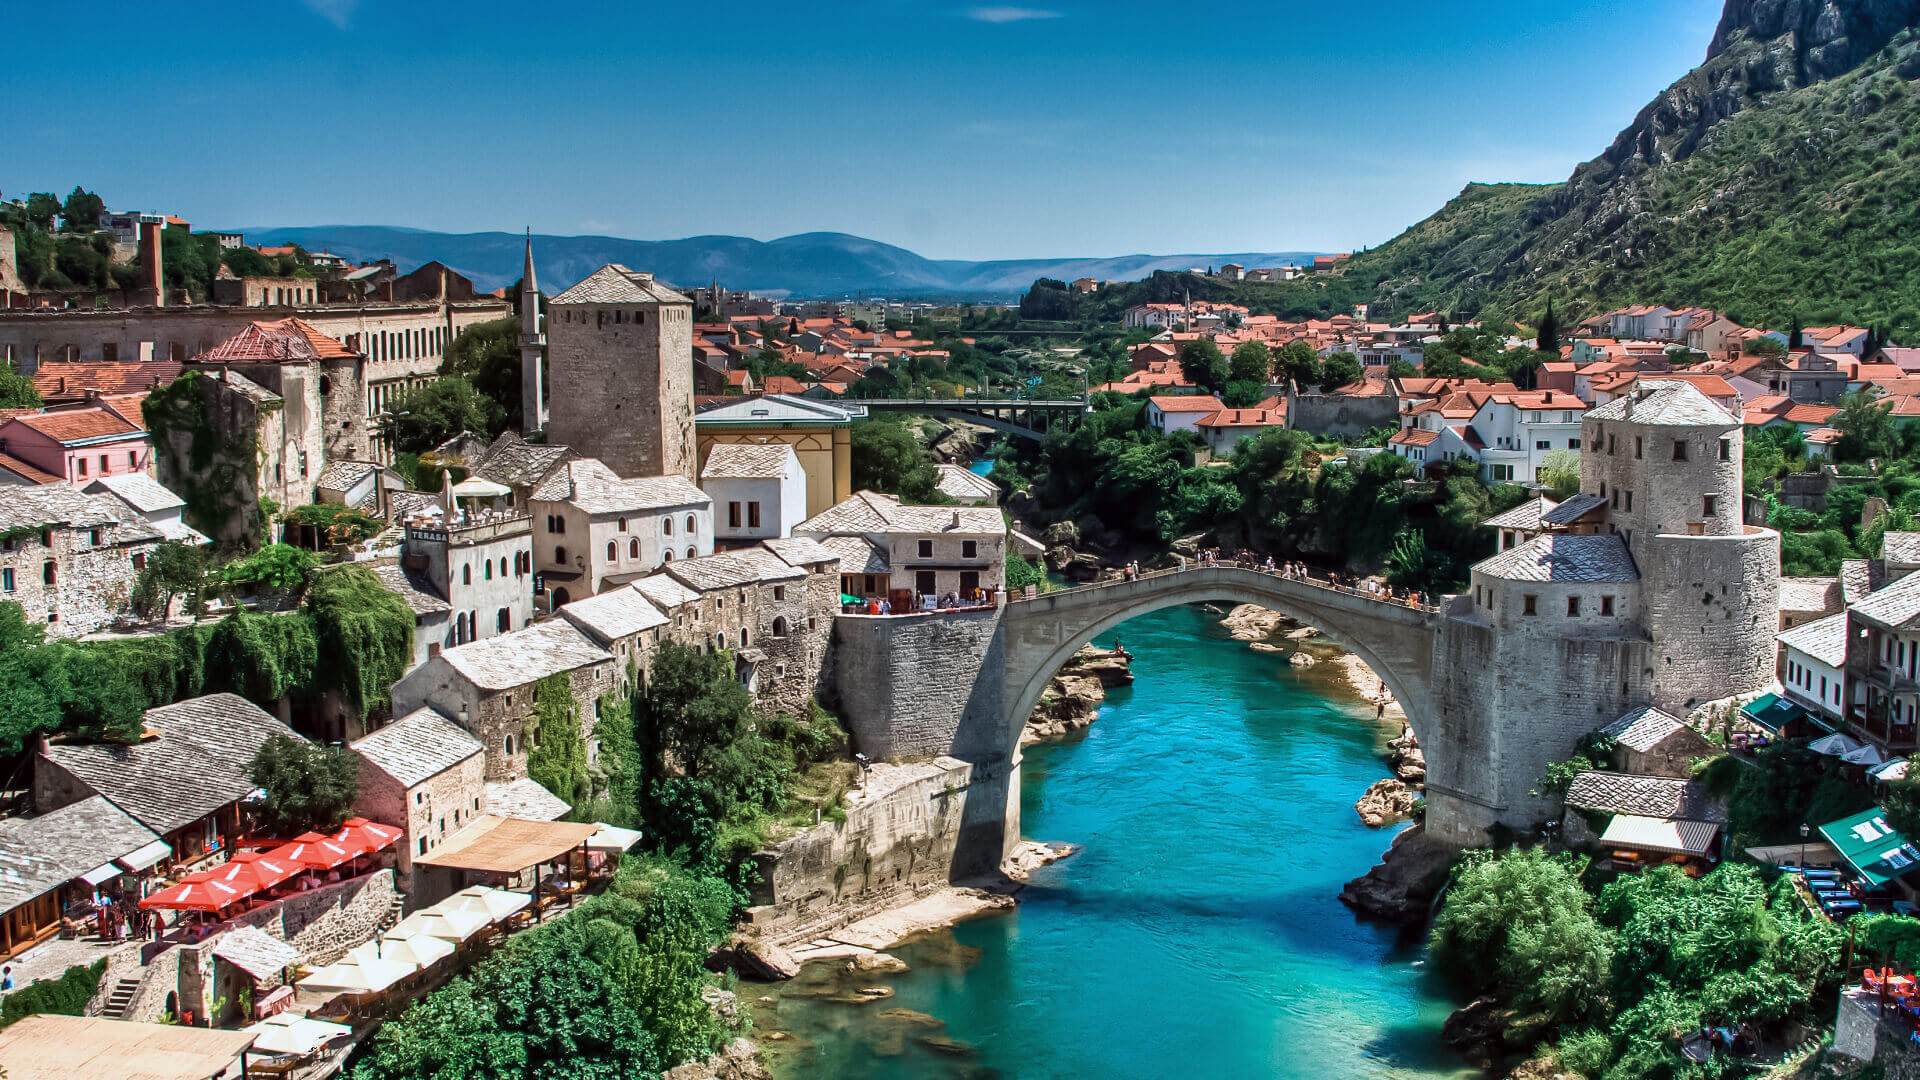 Bosnia and Herzegovina travel guide - Travel S helper